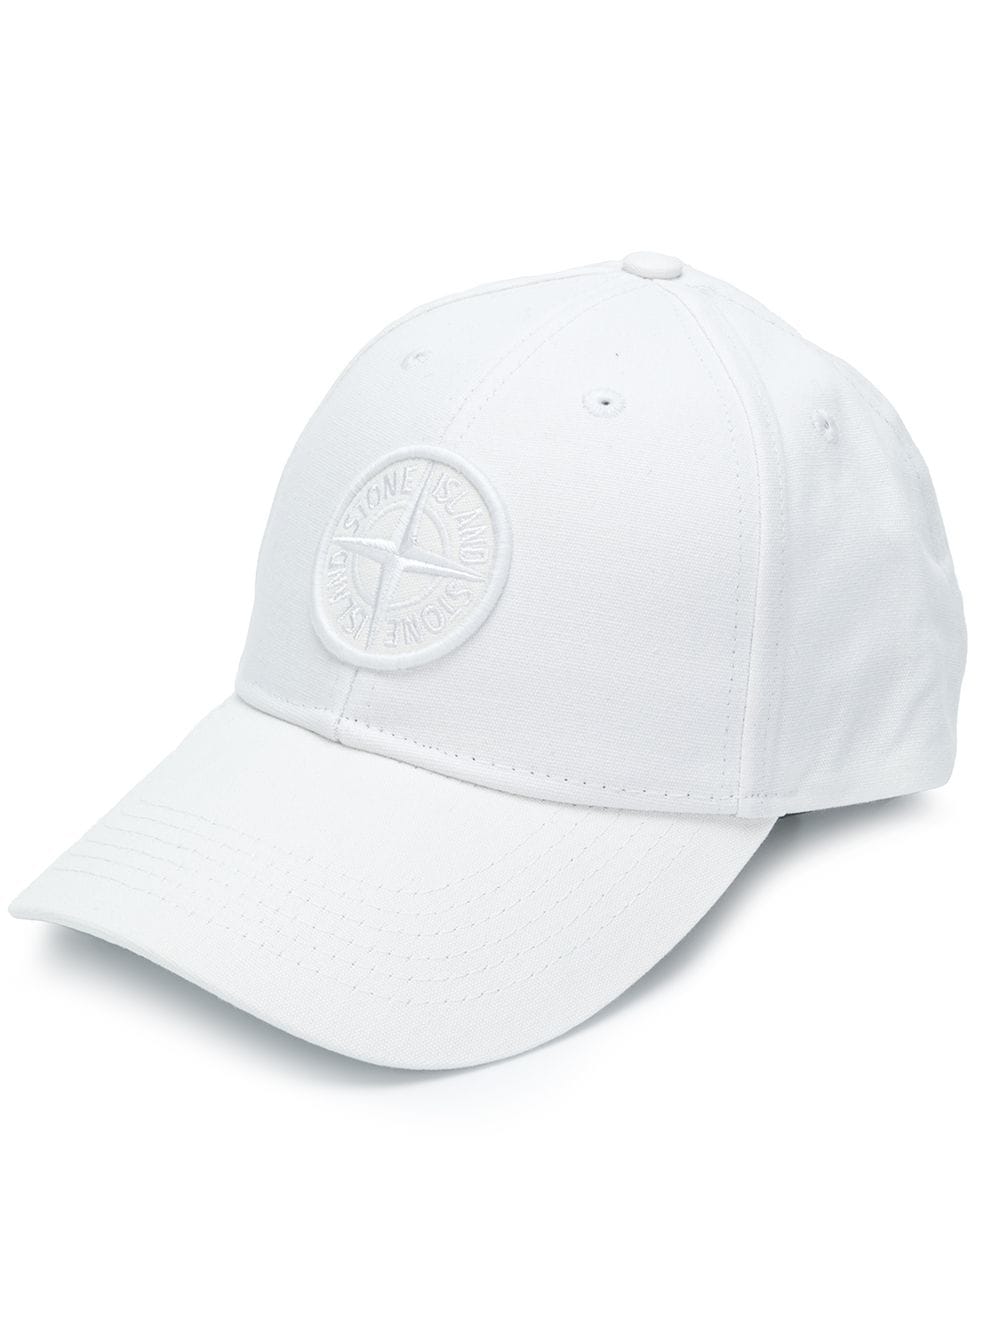 White Cap Construction Logo - Stone Island Compass Logo Baseball Cap In White | ModeSens